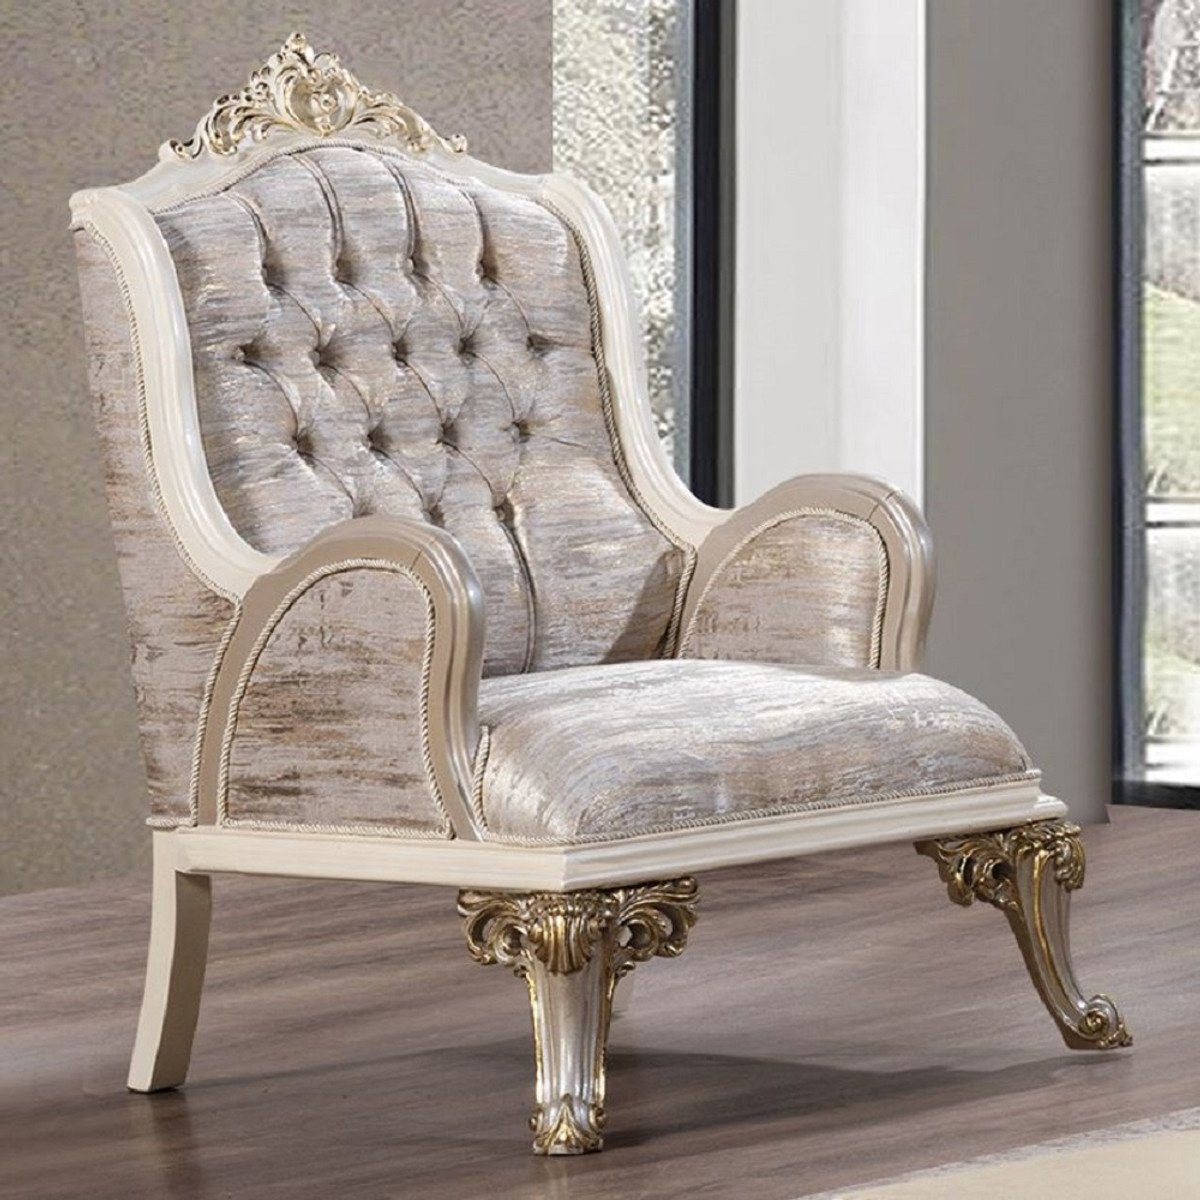 Casa Padrino Sessel Casa Padrino Luxus Barock Sessel Silber / Weiß / Grau / Gold - Prunkvoller Wohnzimmer Sessel mit elegantem Muster - Luxus Wohnzimmer Möbel im Barockstil - Barock Möbel - Barock Einrichtung